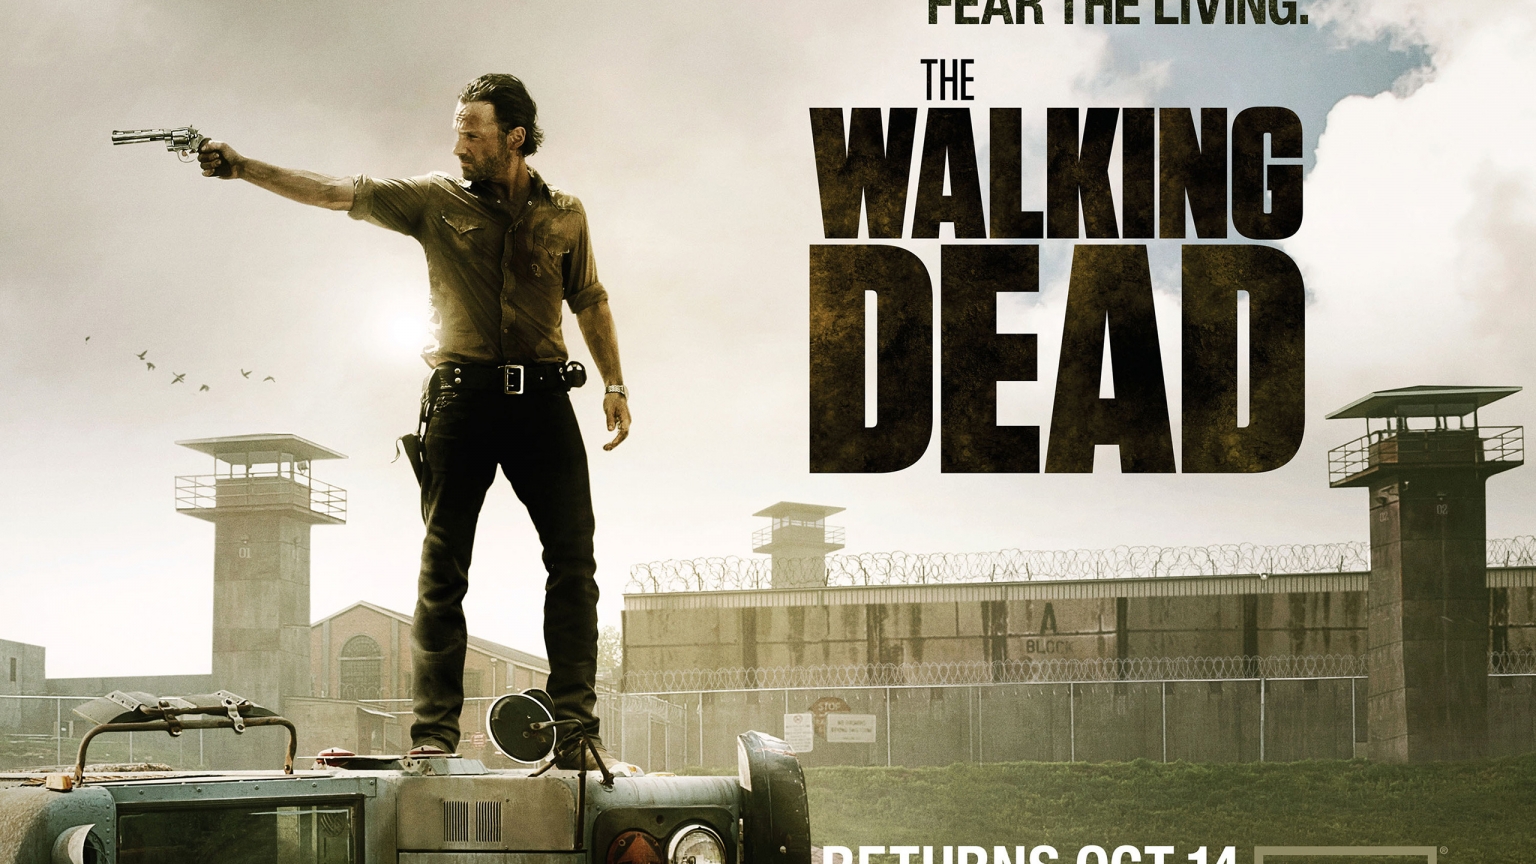 The Walking Dead Season 4 for 1536 x 864 HDTV resolution